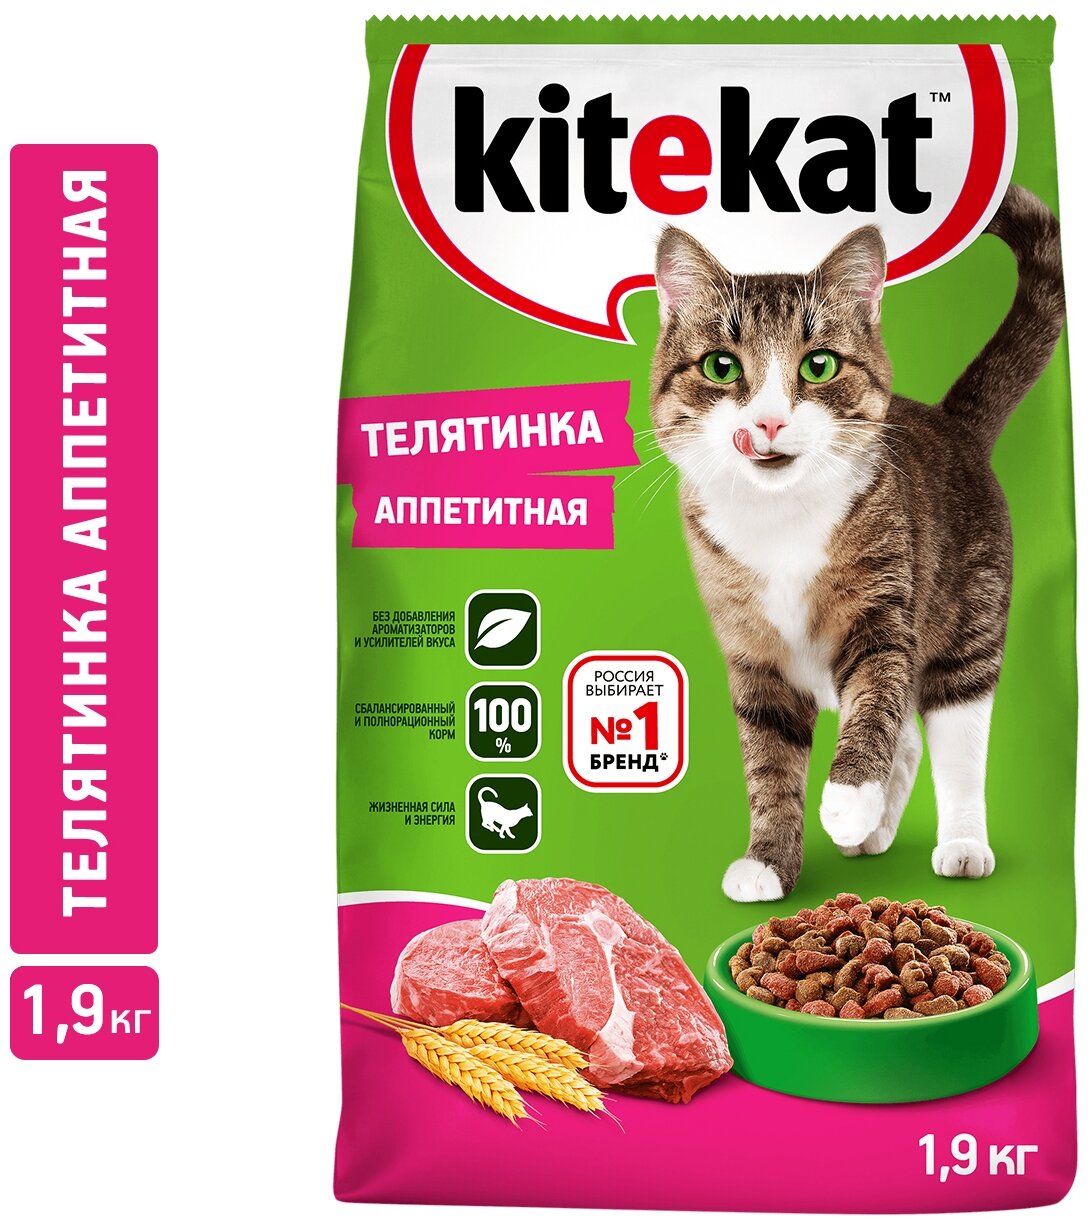 Сухой корм для кошек Kitekat телятинка аппетитная, 1.9кг - фотография № 1